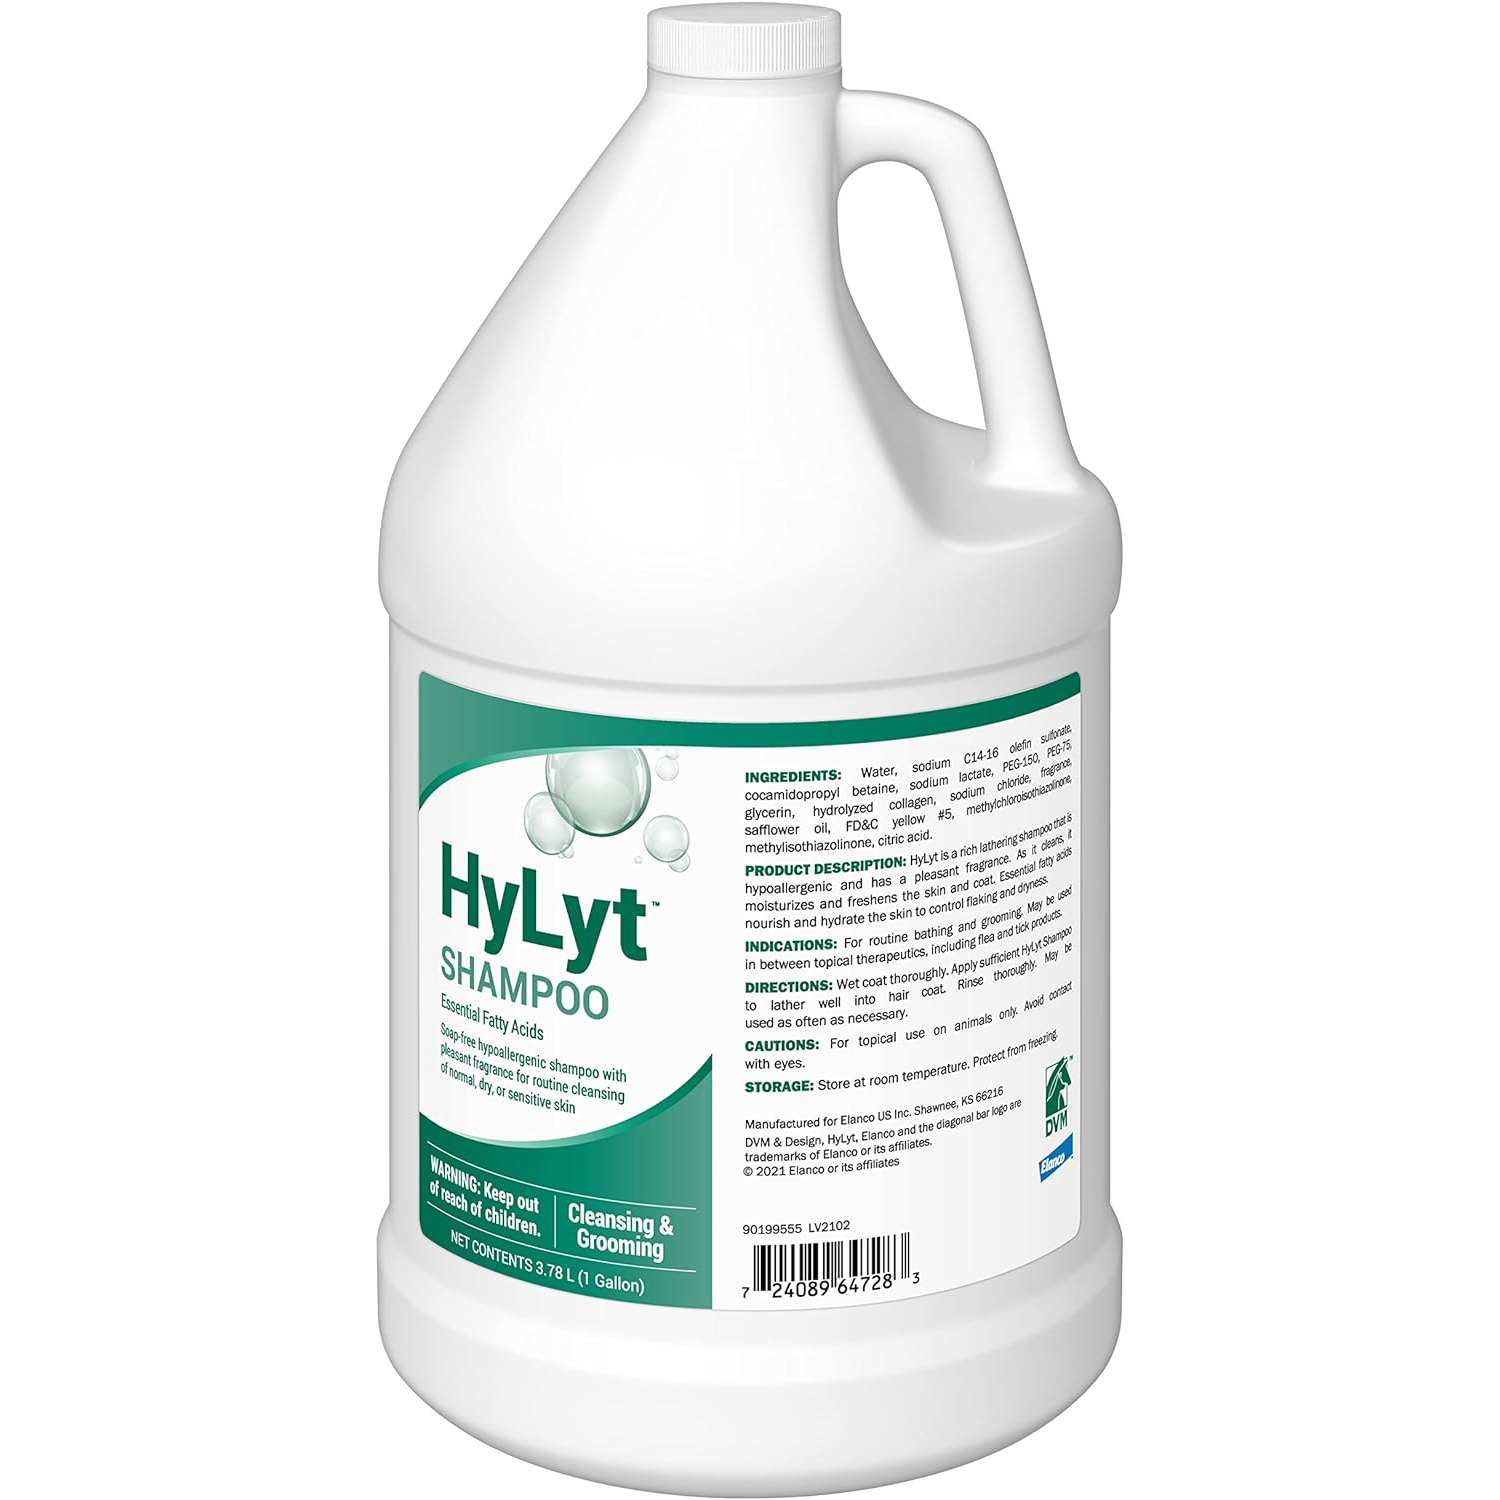 HyLyt Hypoallergenic Shampoo with Fatty Acids